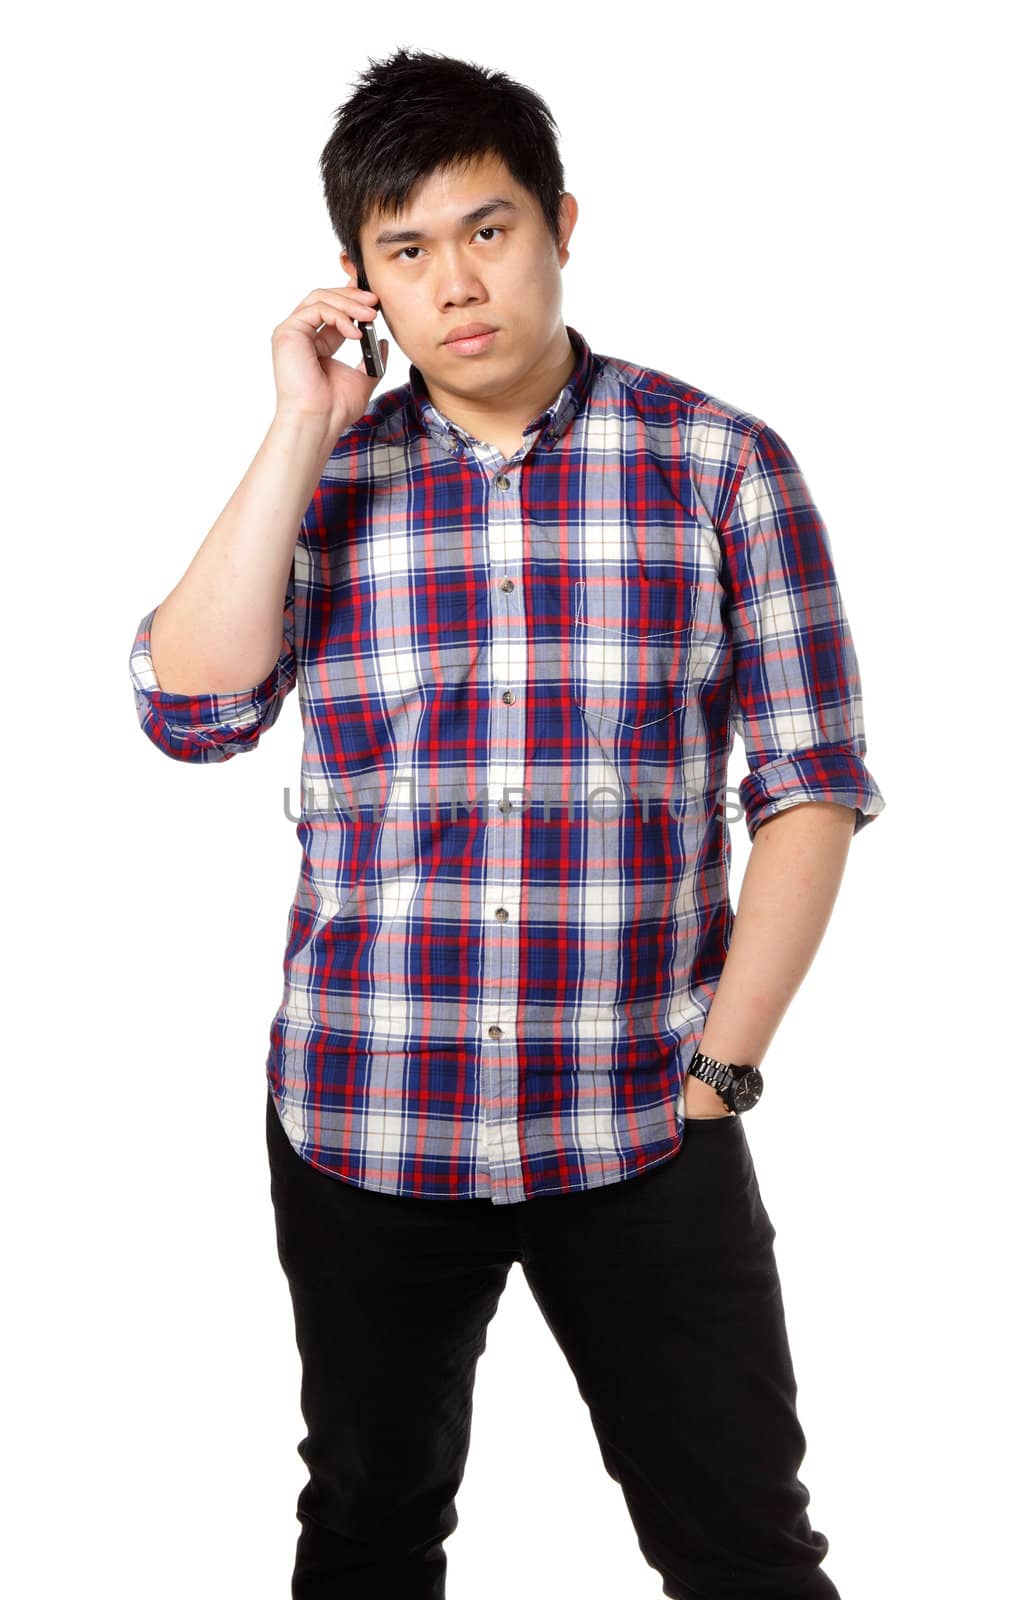 man talk on phone by leungchopan